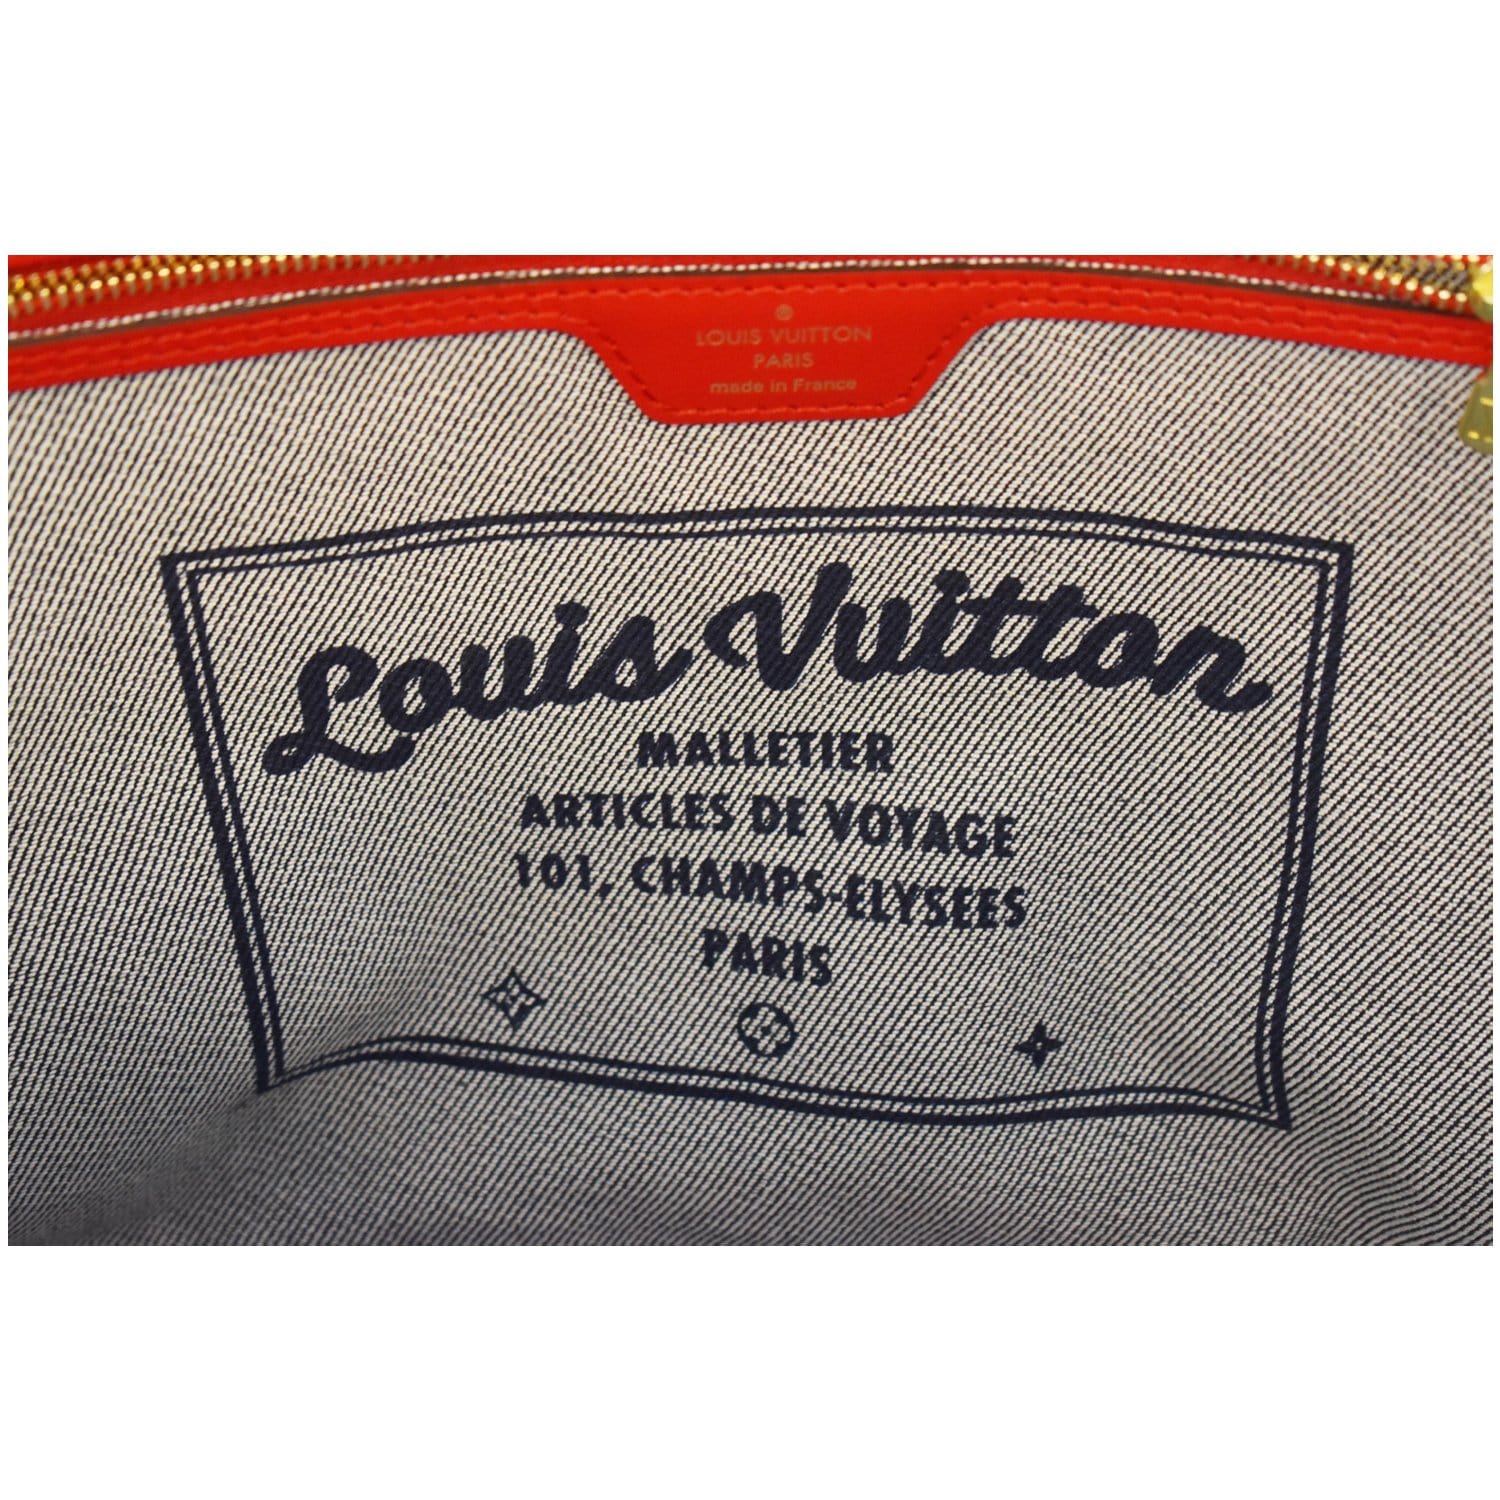 Sold at Auction: Louis Vuitton, LOUIS VUITTON DENIM PATCHWORK NEVERFULL  MM TOTE